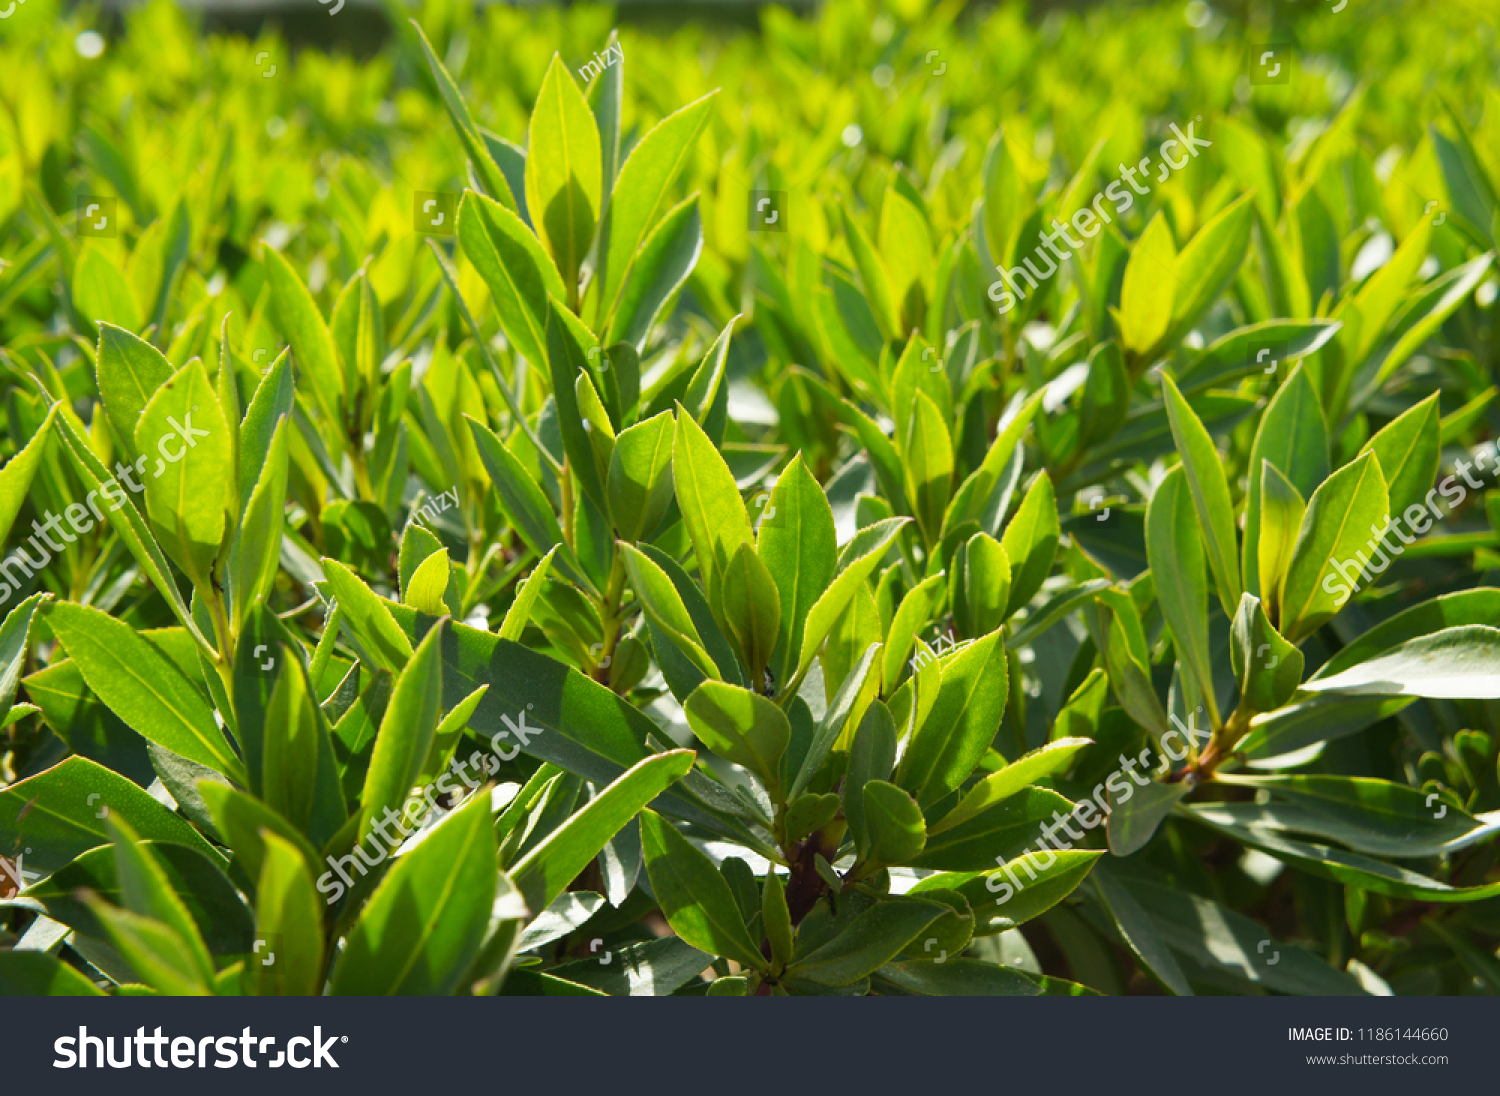 Prunus laurocerasus or cherry laurel or common laurel  green plant in sunlight #1186144660